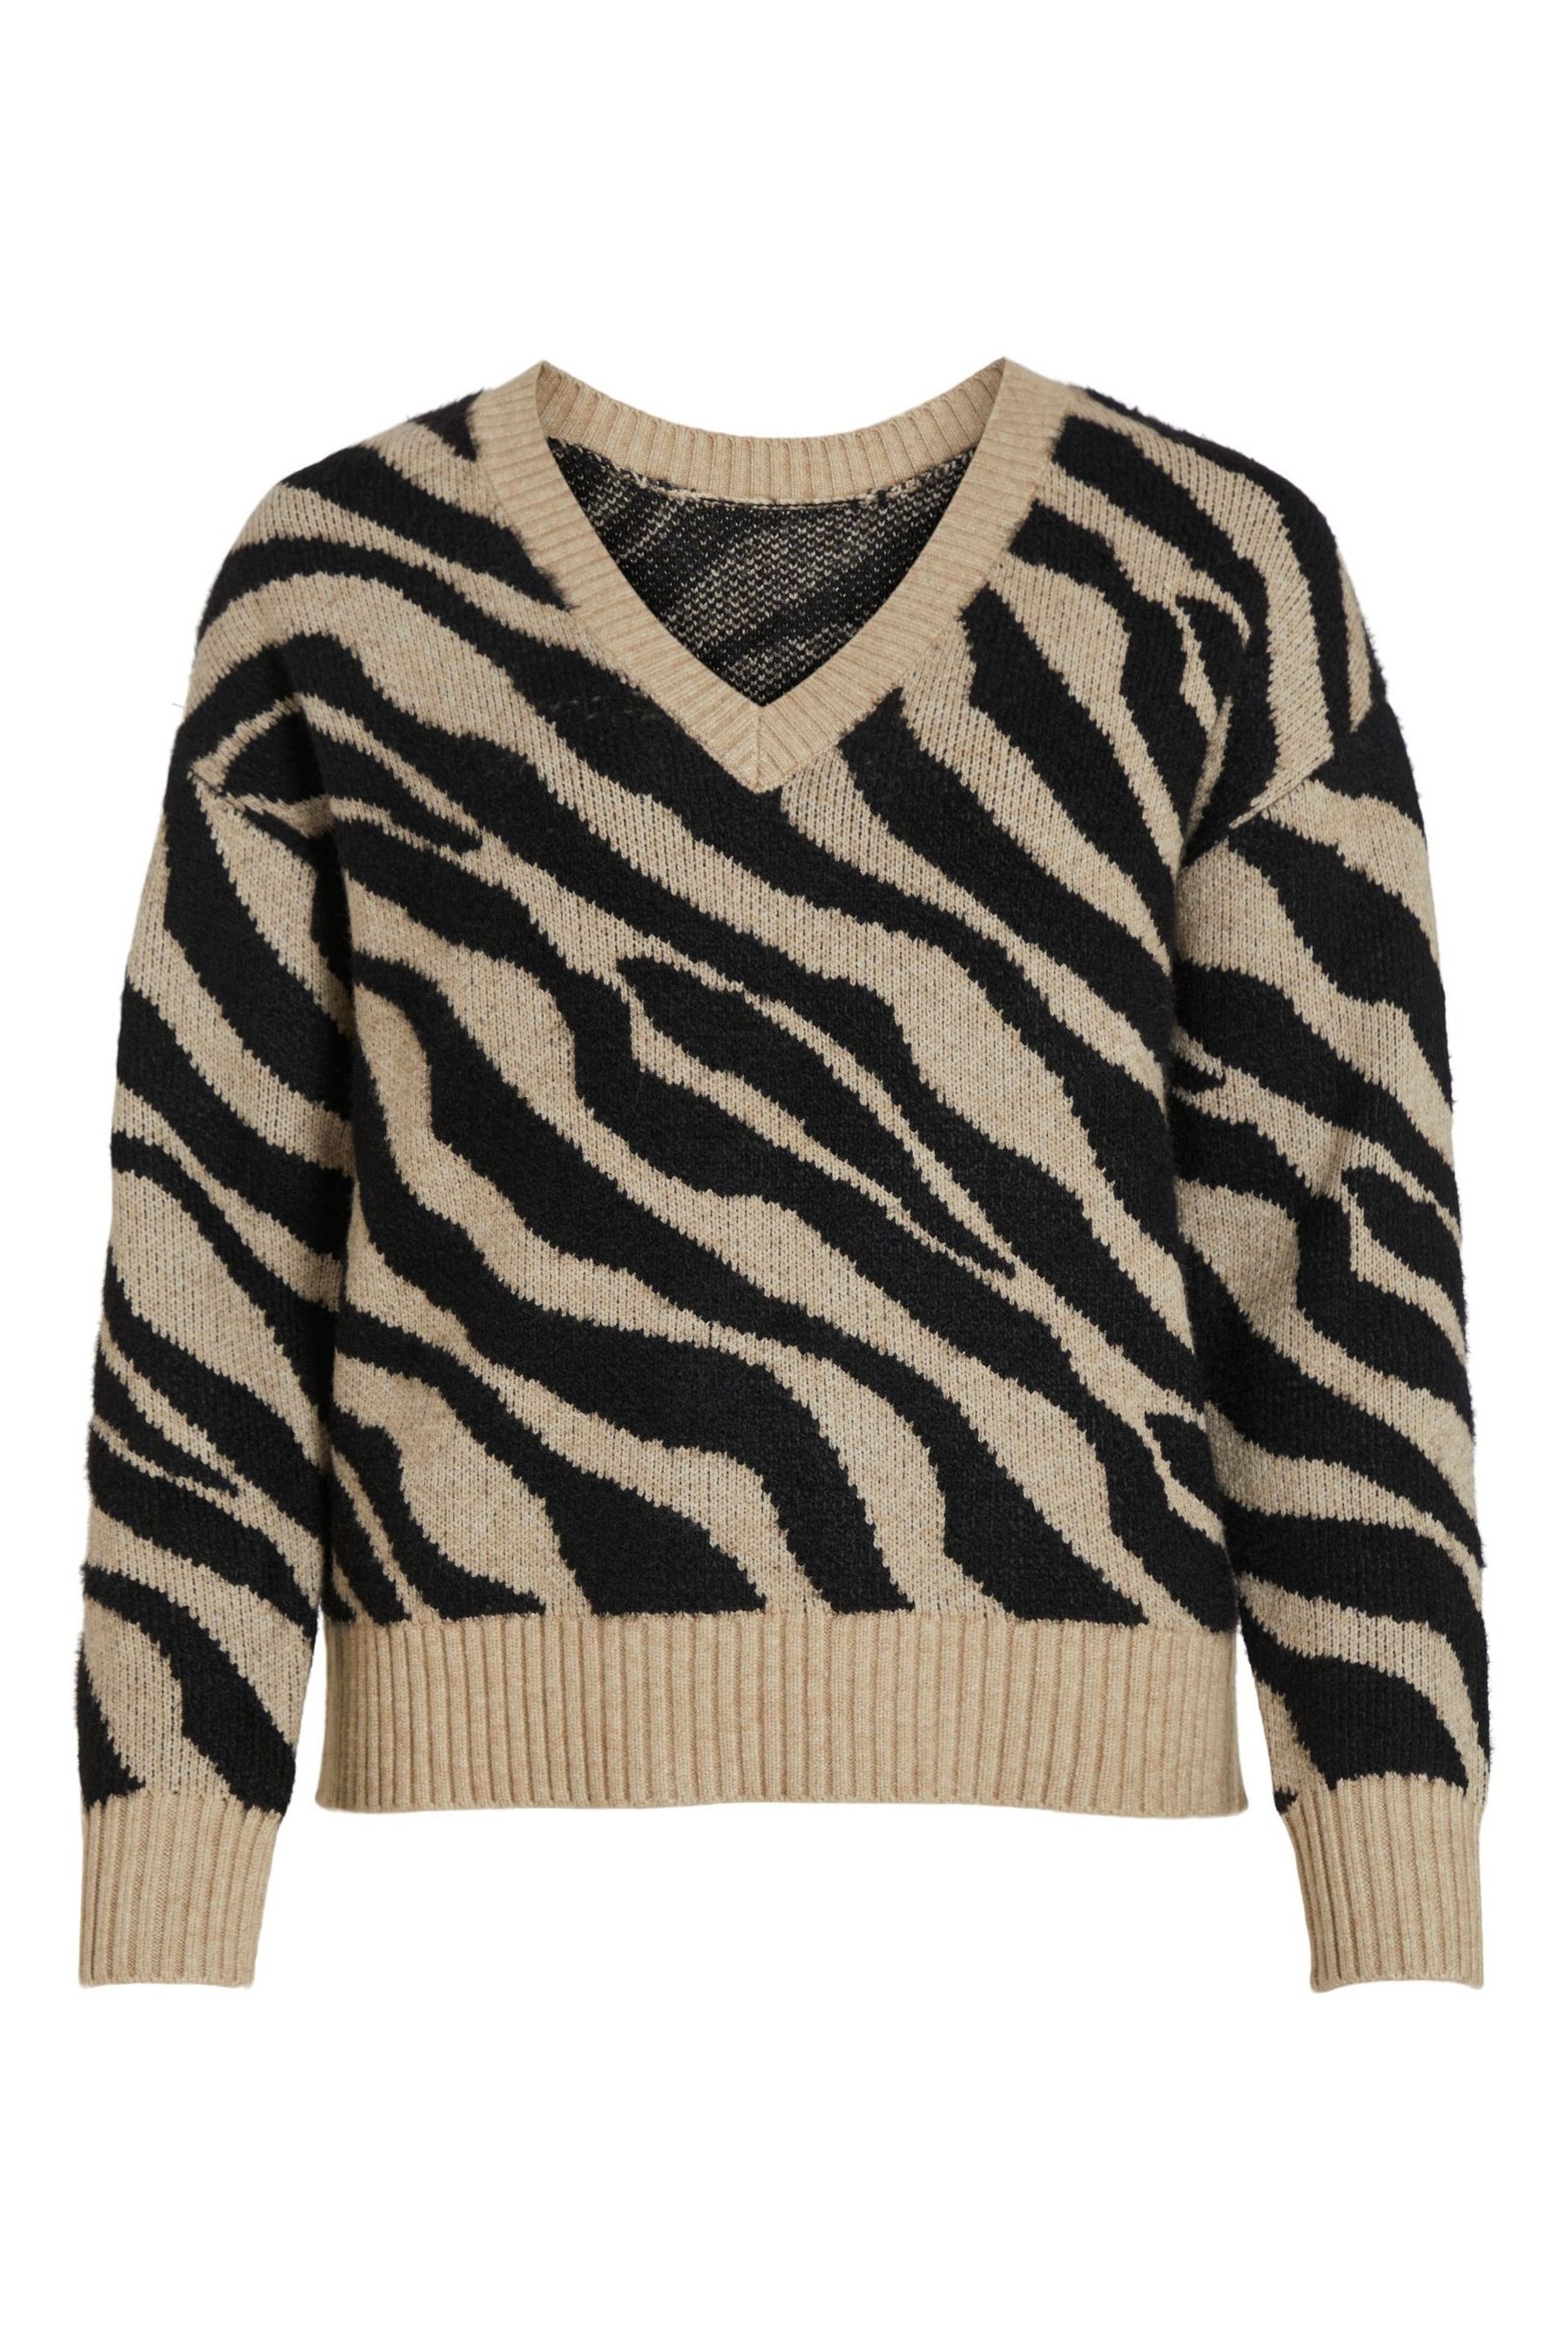 Buy VILA Black V Neck Zebra Knitted Jumper from the Next UK online shop